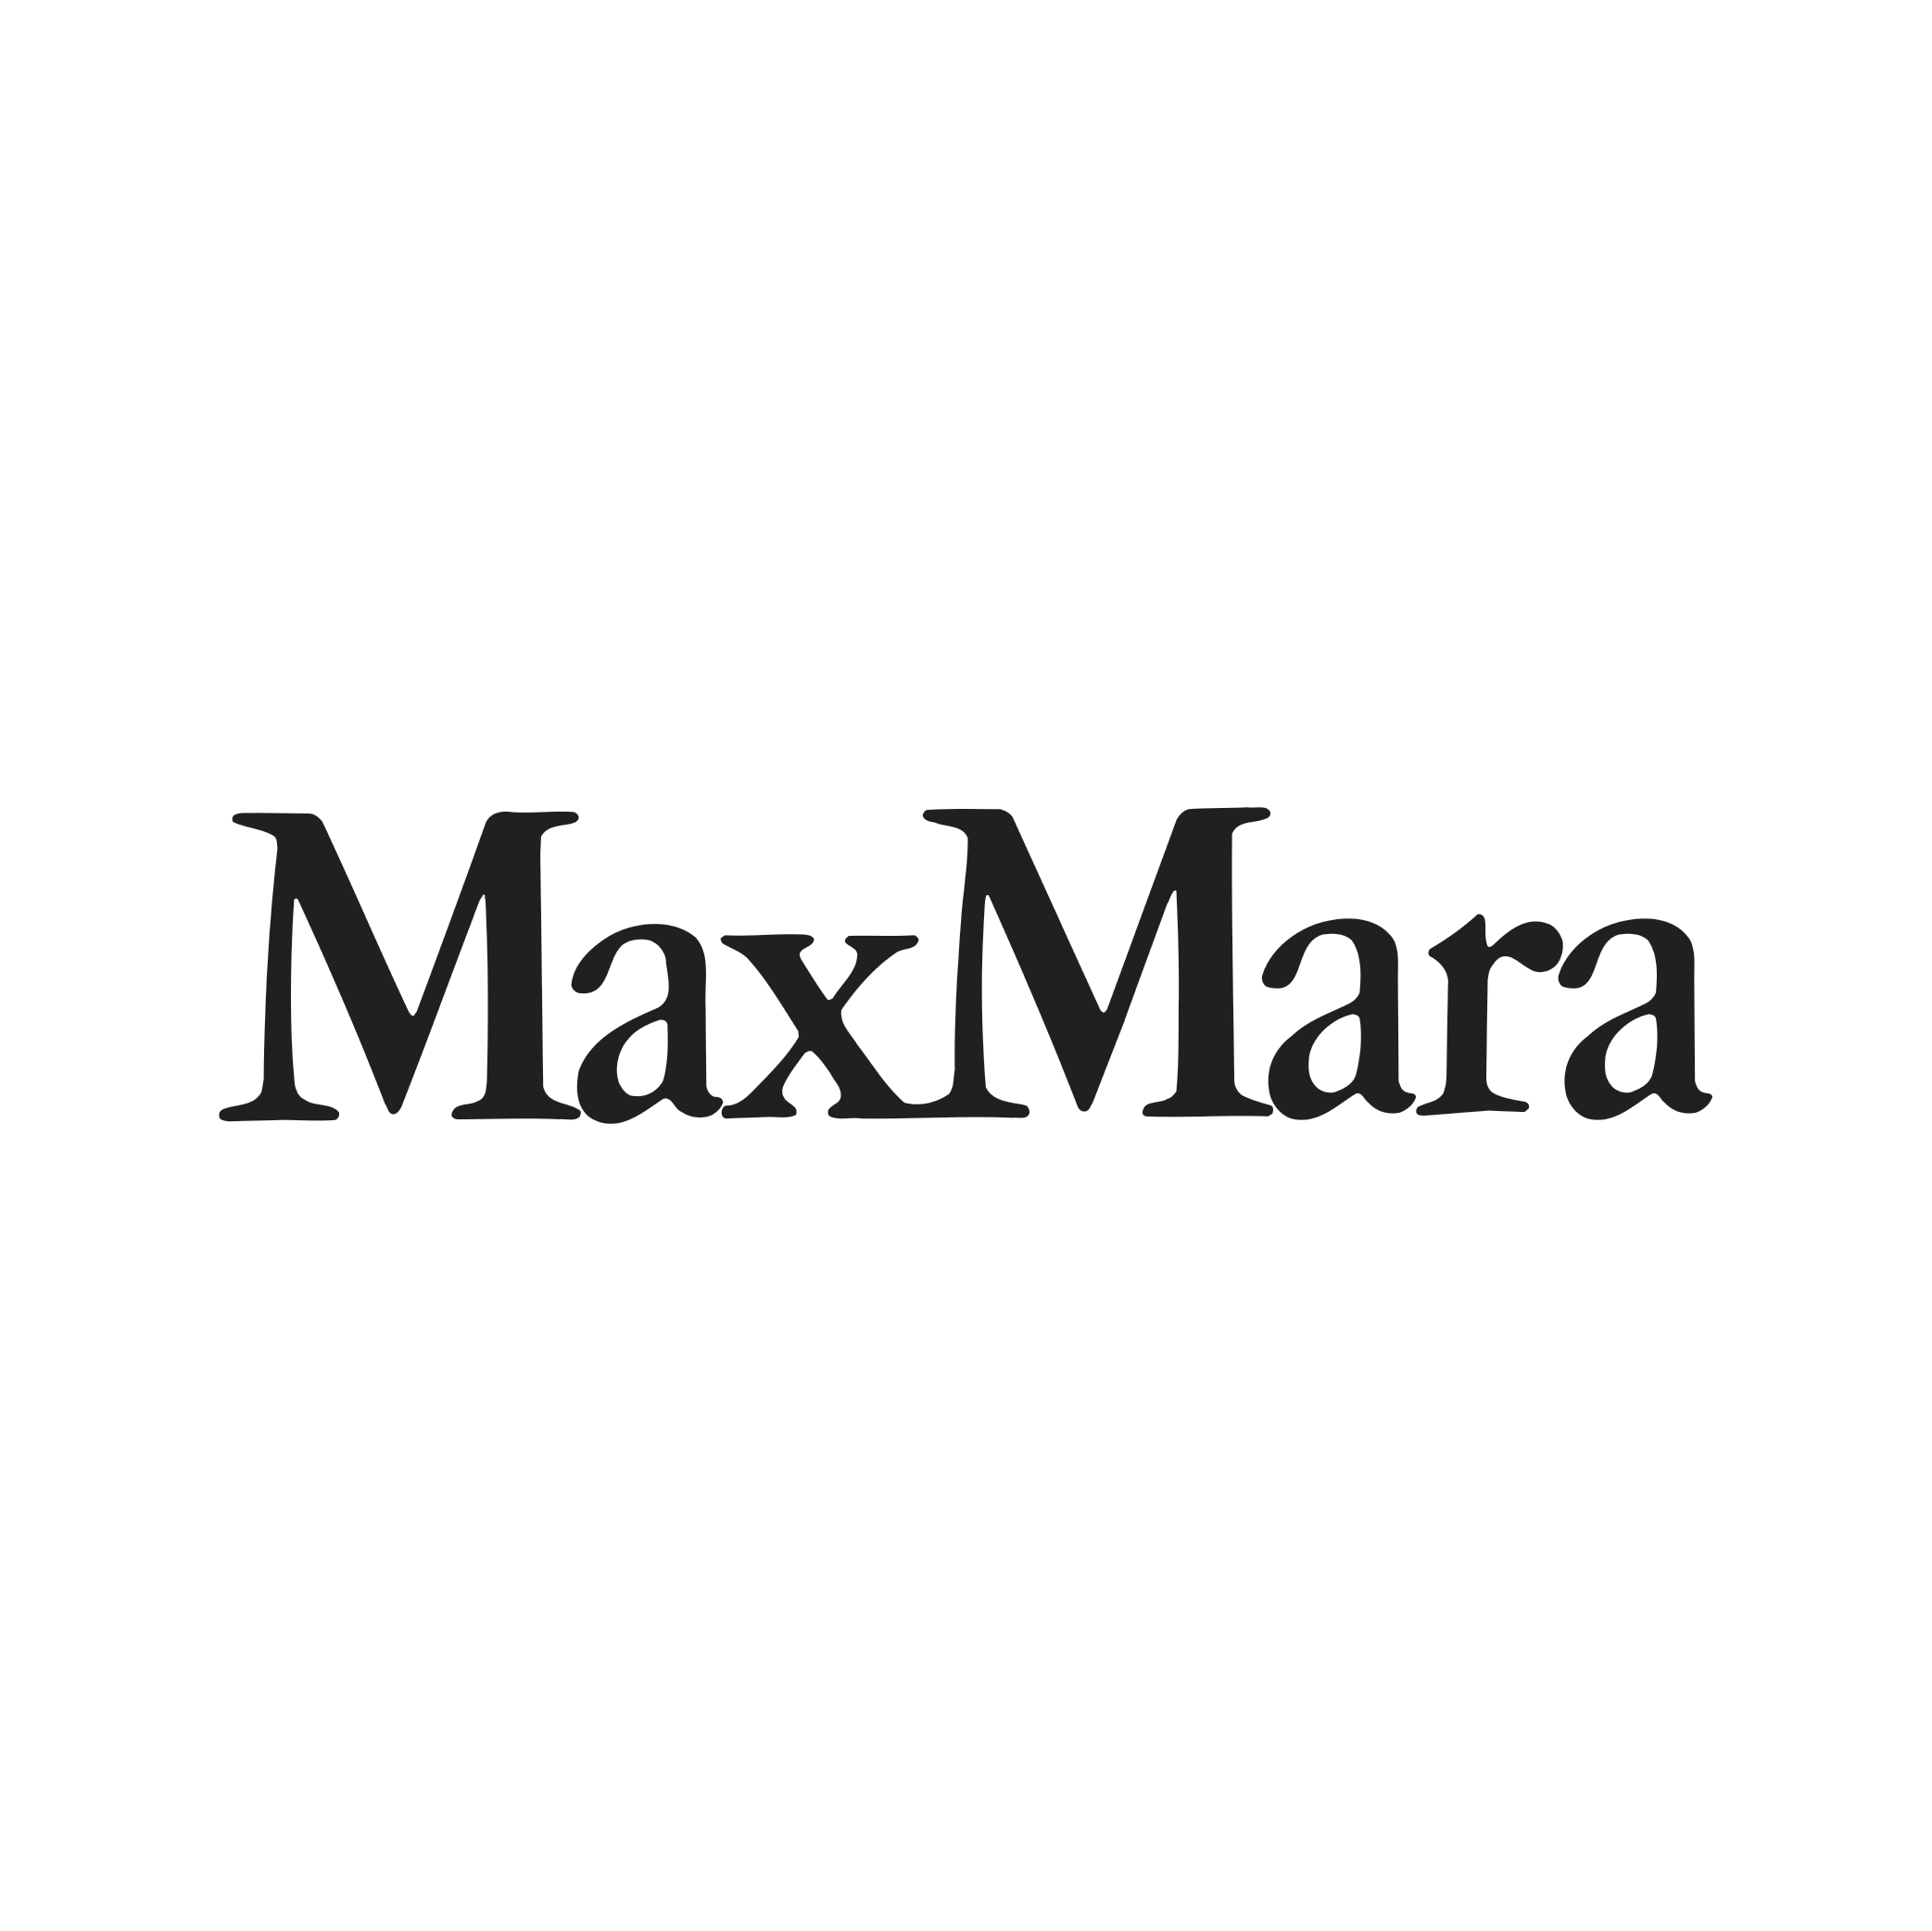 MaxMara logo - SEC Newgate